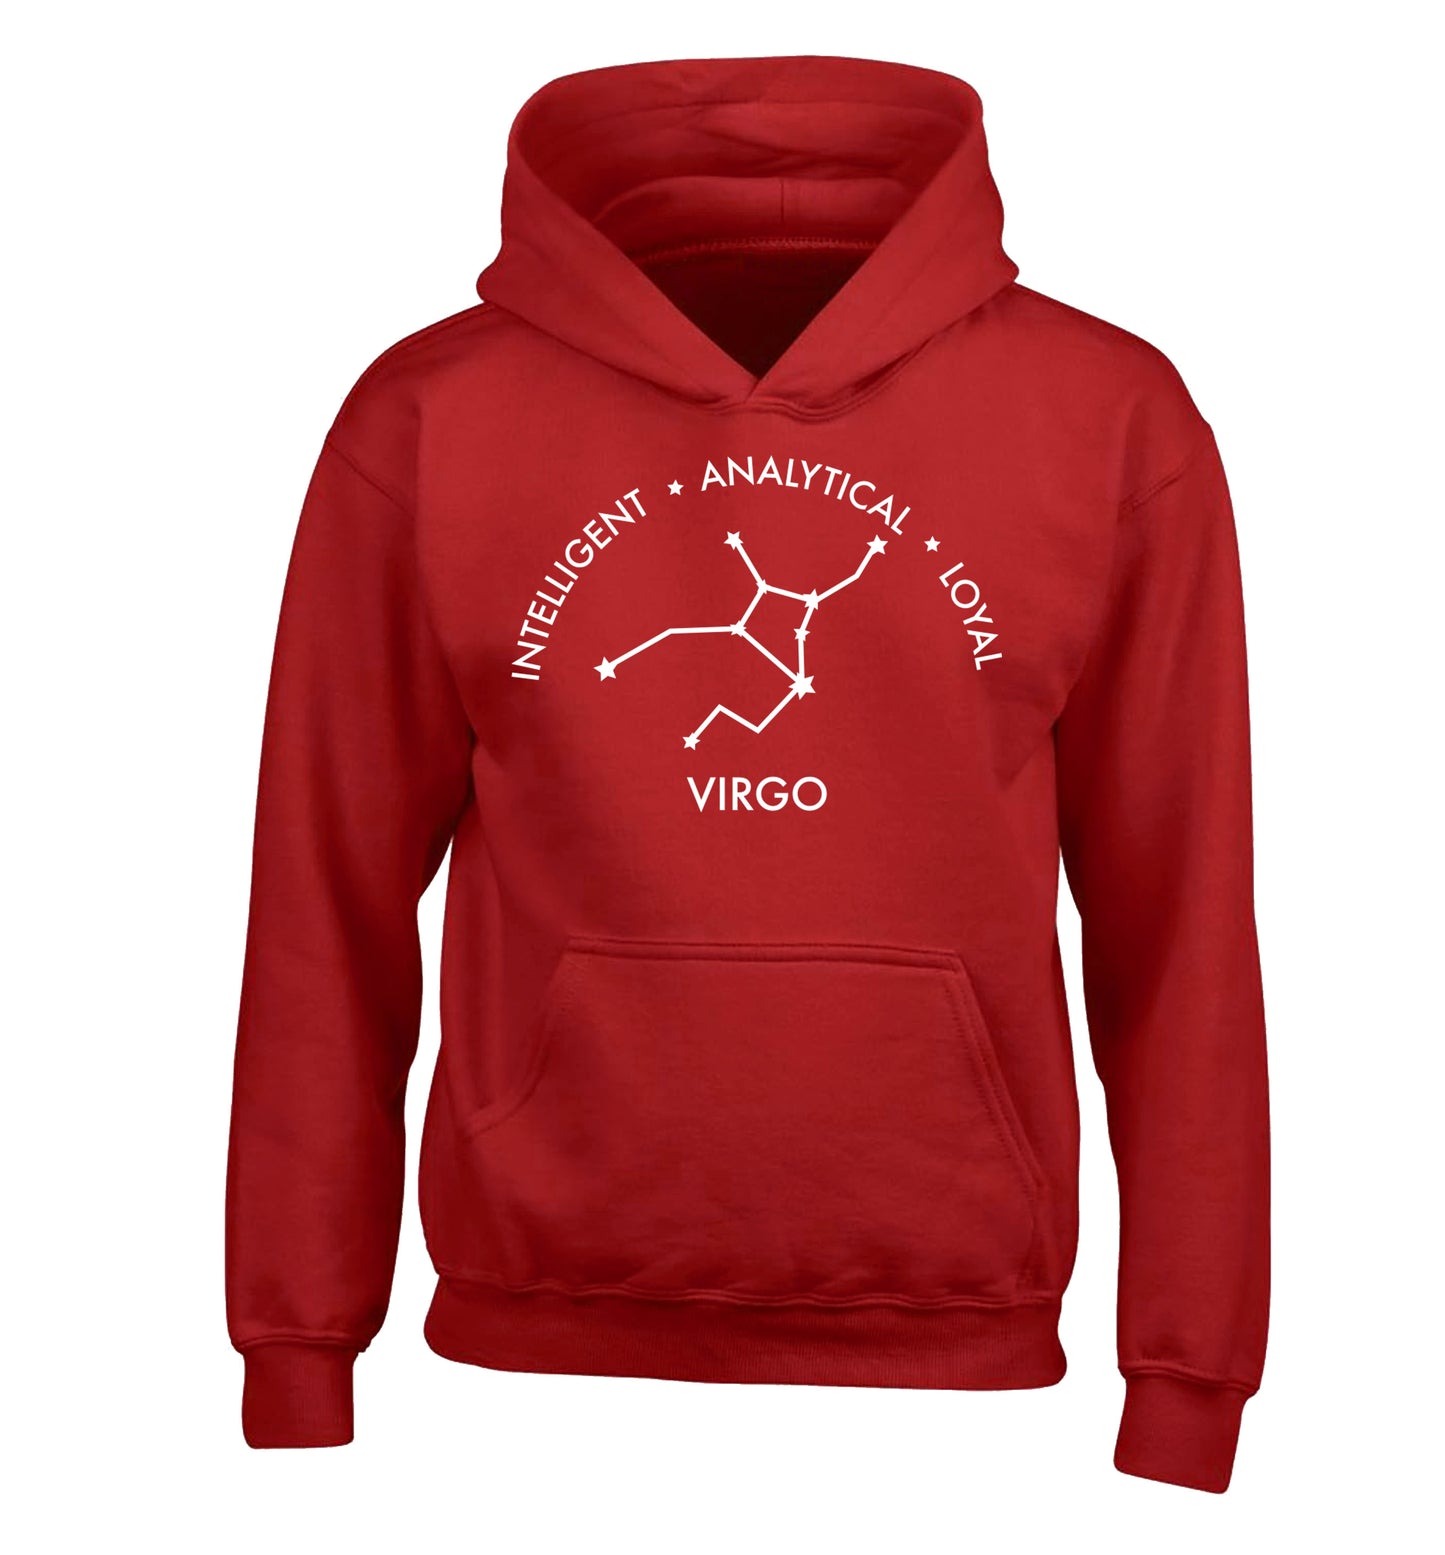 Virgo: Intelligent, Analytical, Loyal children's red hoodie 12-13 Years